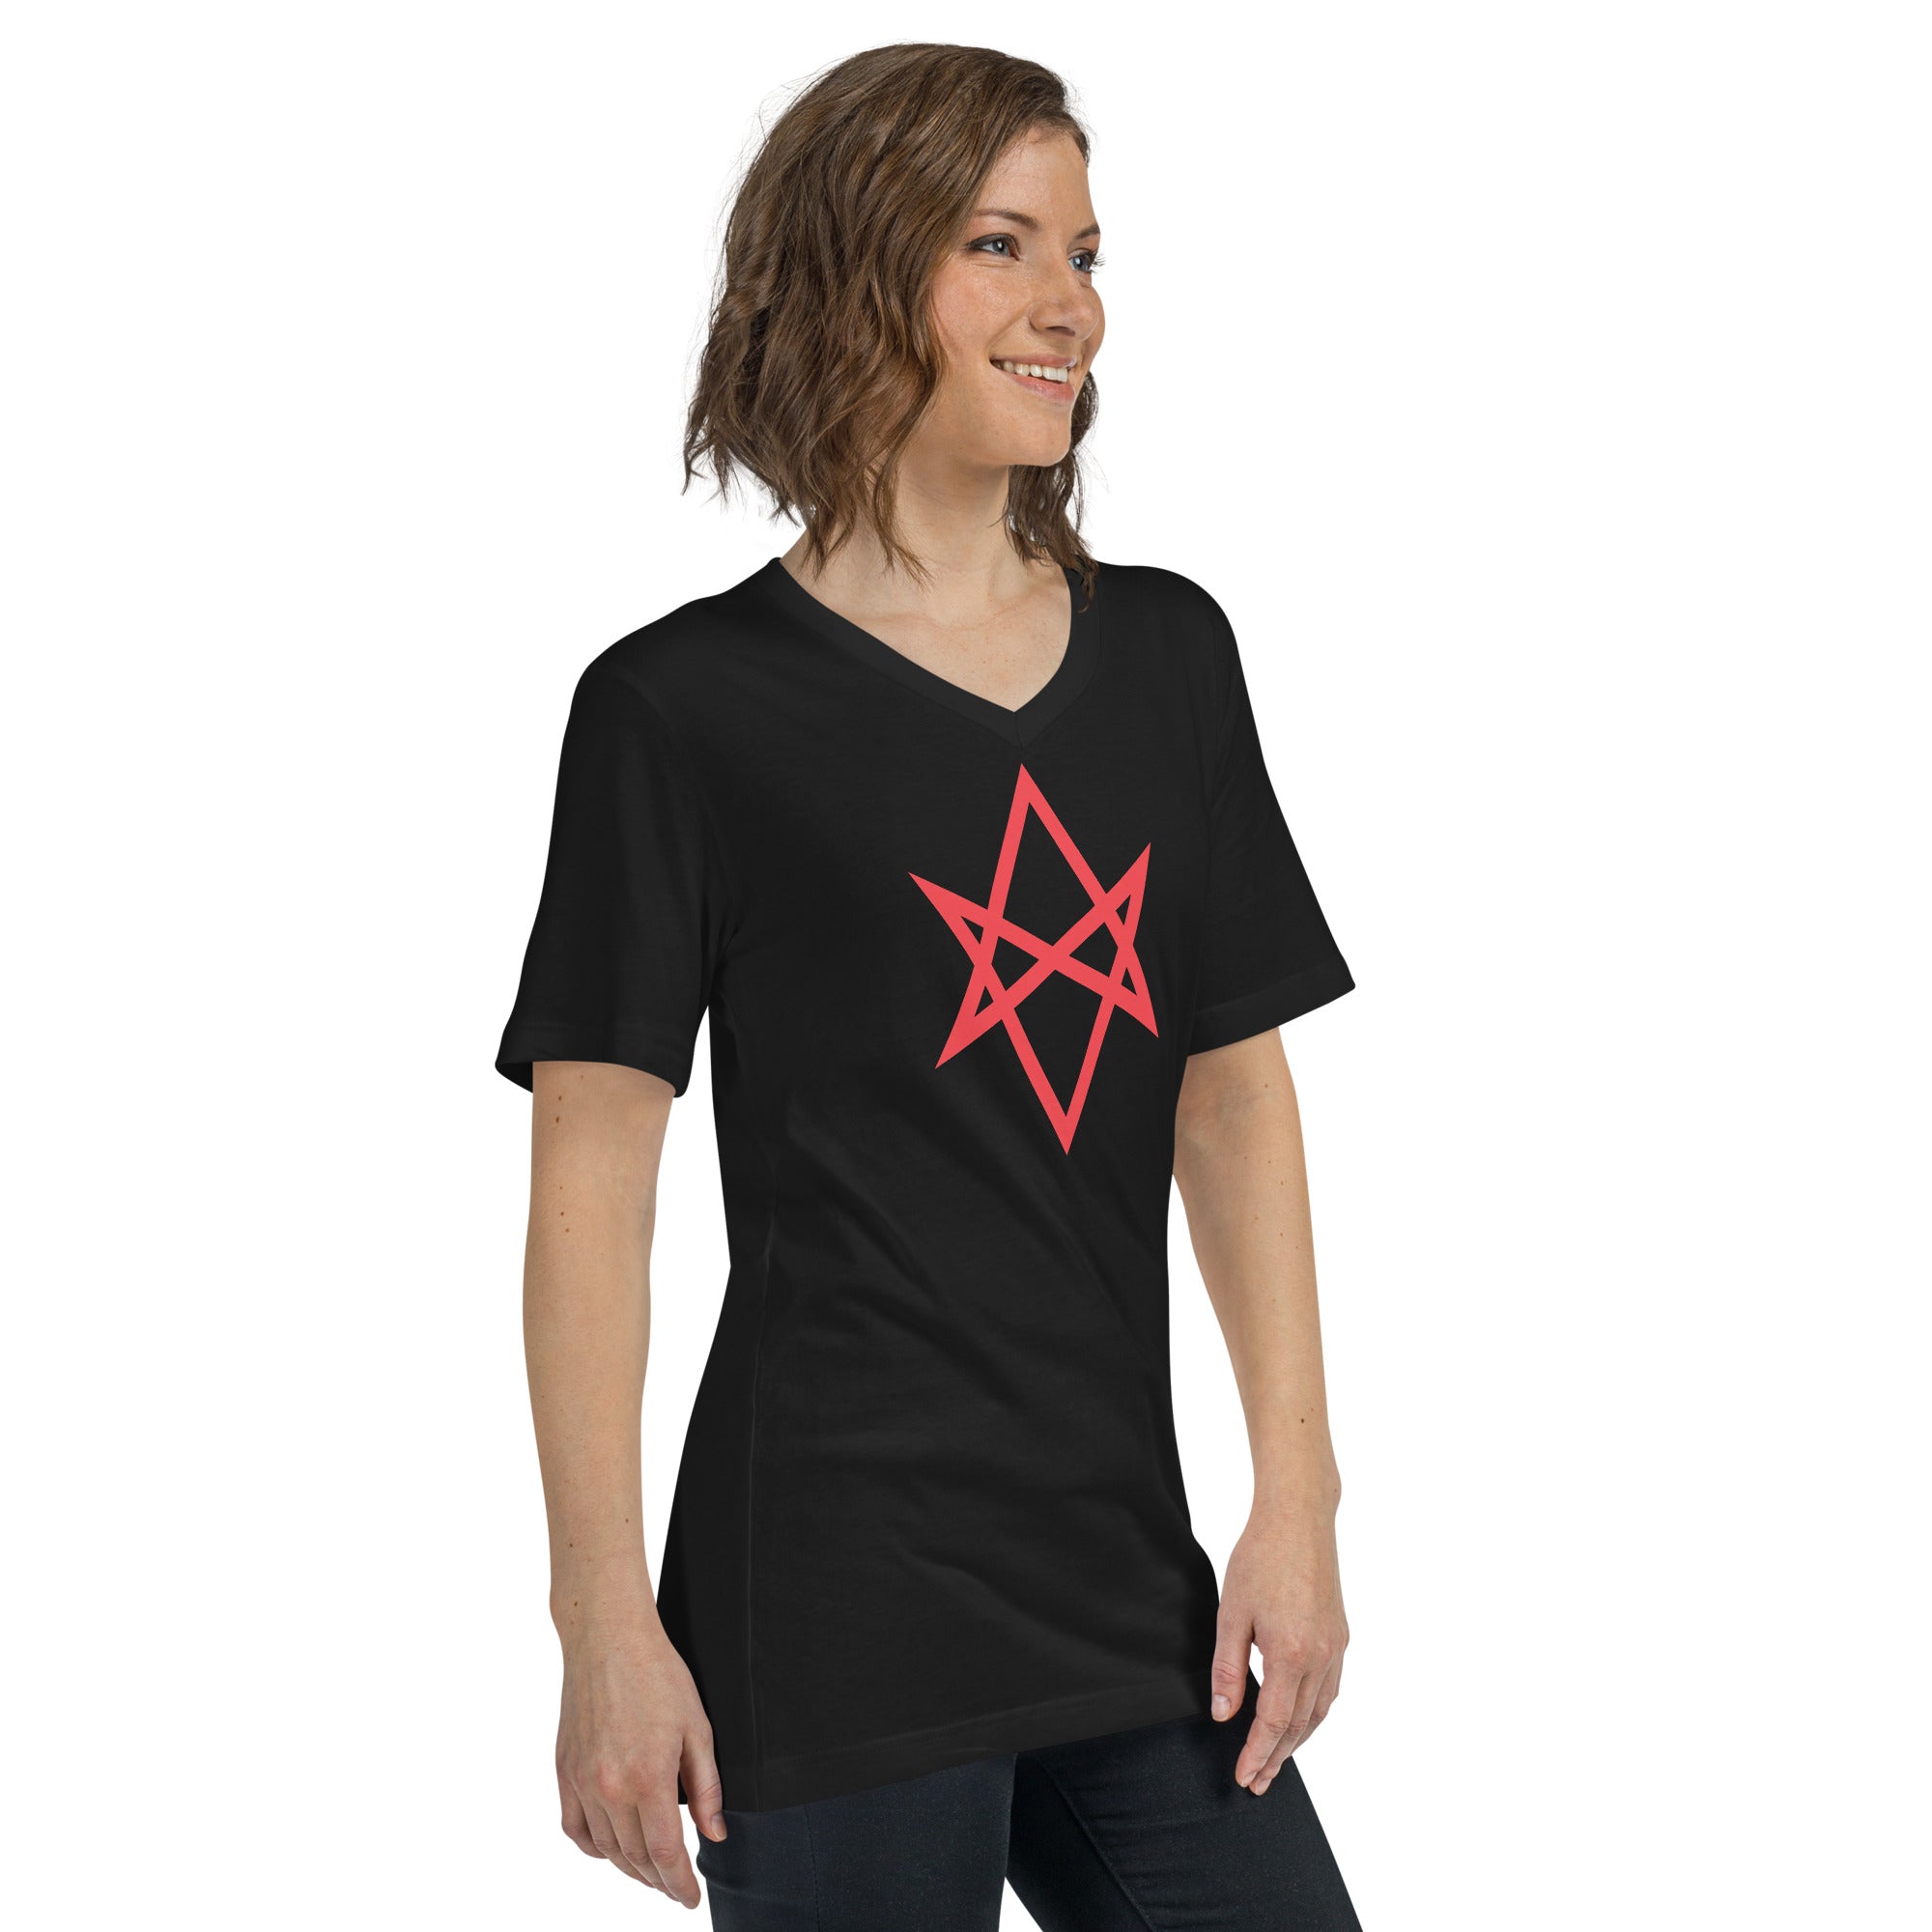 Red Unicursal Hexagram Six Pointed Star Women’s Short Sleeve V-Neck T-Shirt